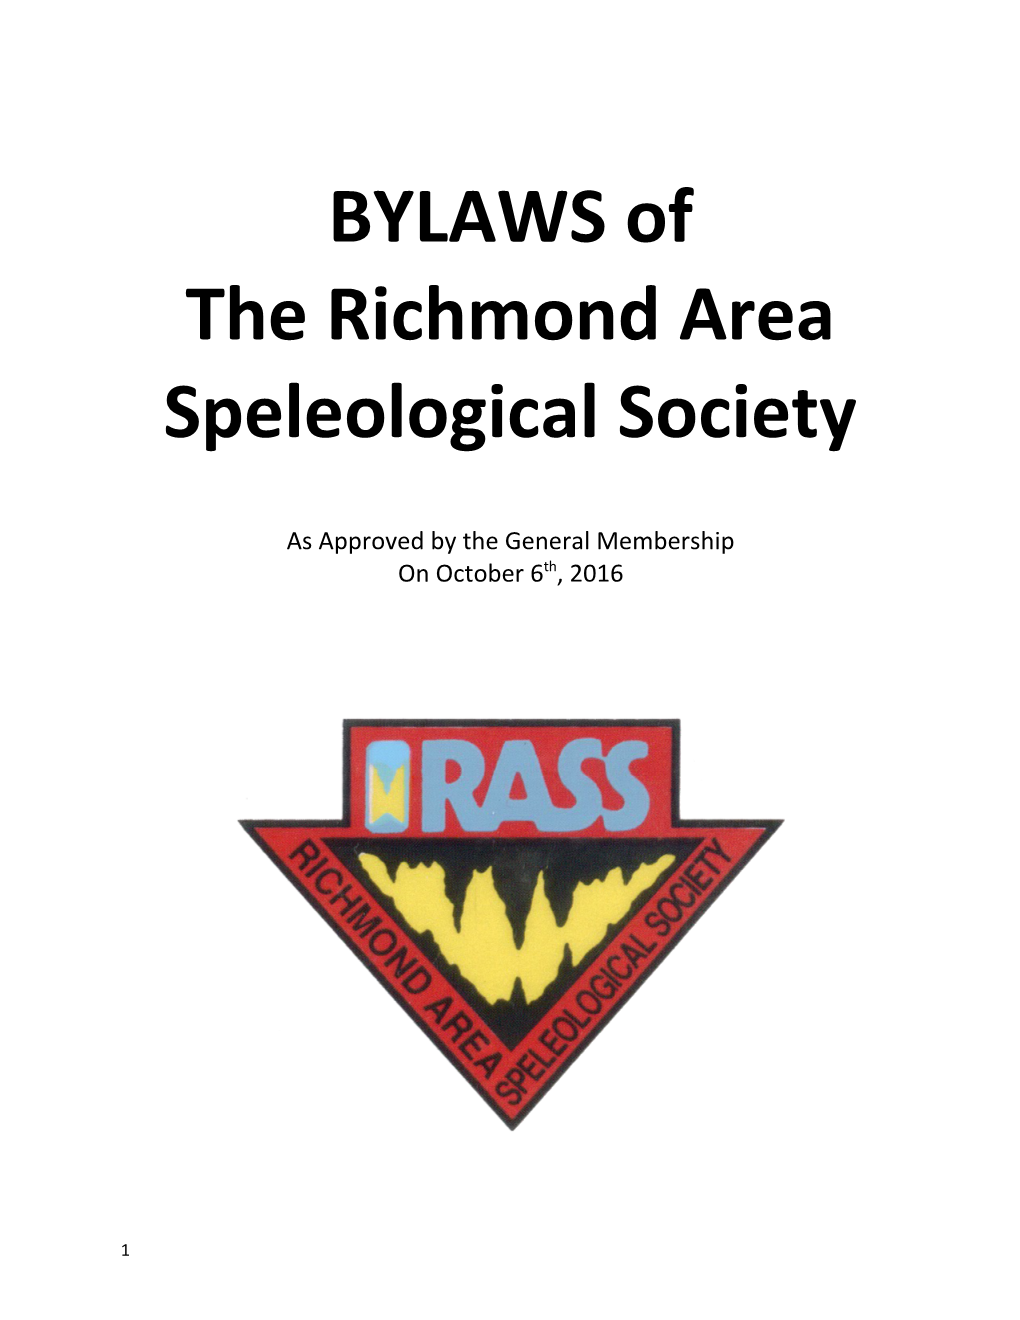 The Richmond Area Speleological Society